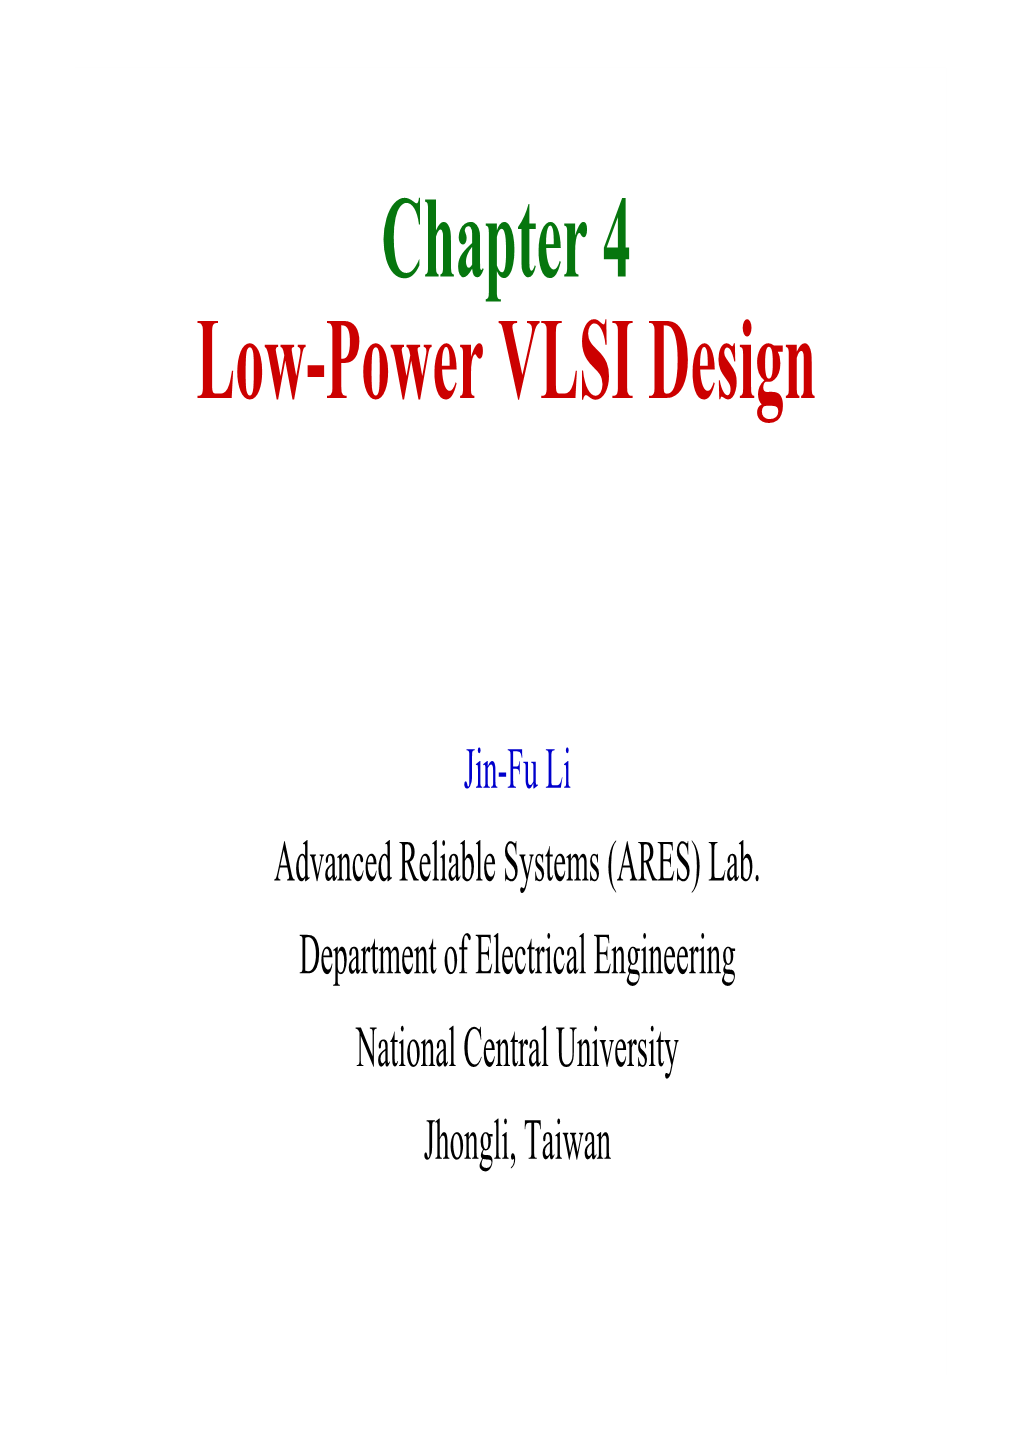 Chapter 4 Low-Power VLSI Design